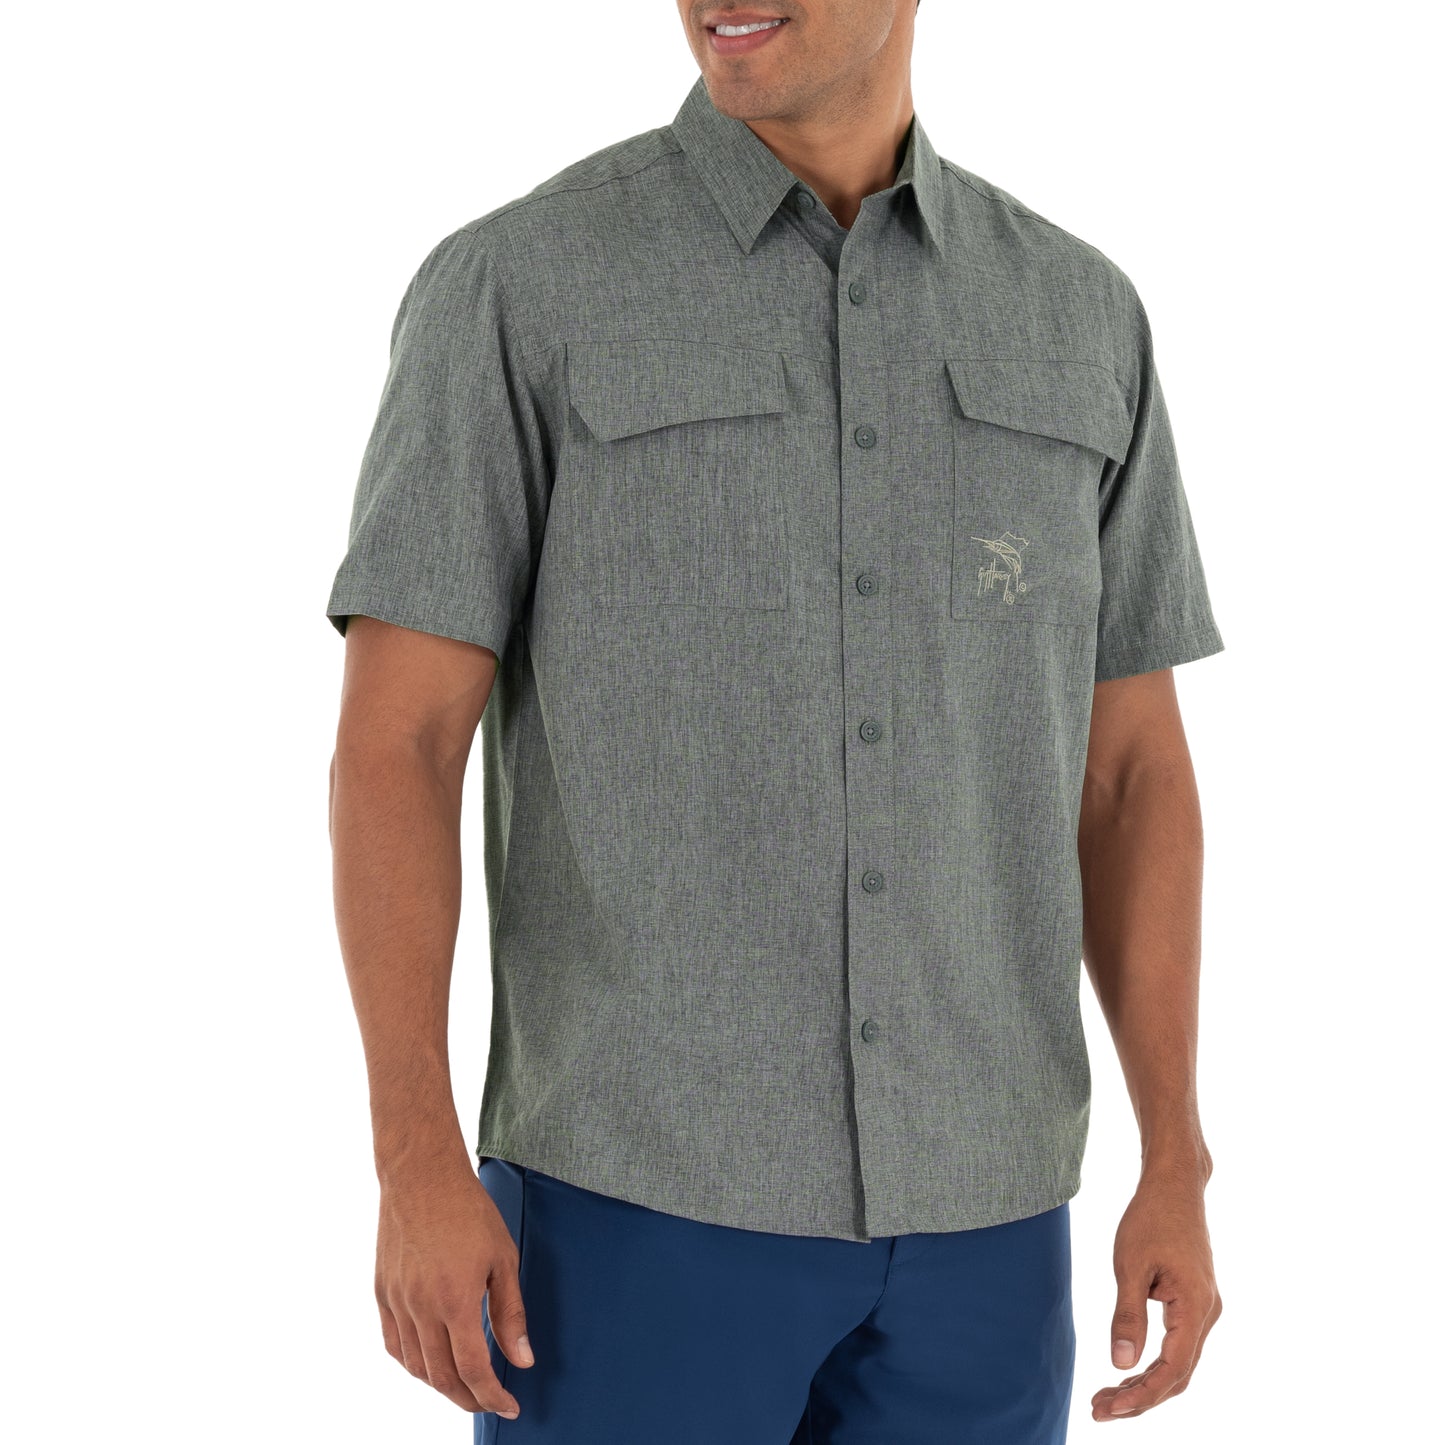 Men's Short Sleeve Heather Textured Cationic Grey Fishing Shirt